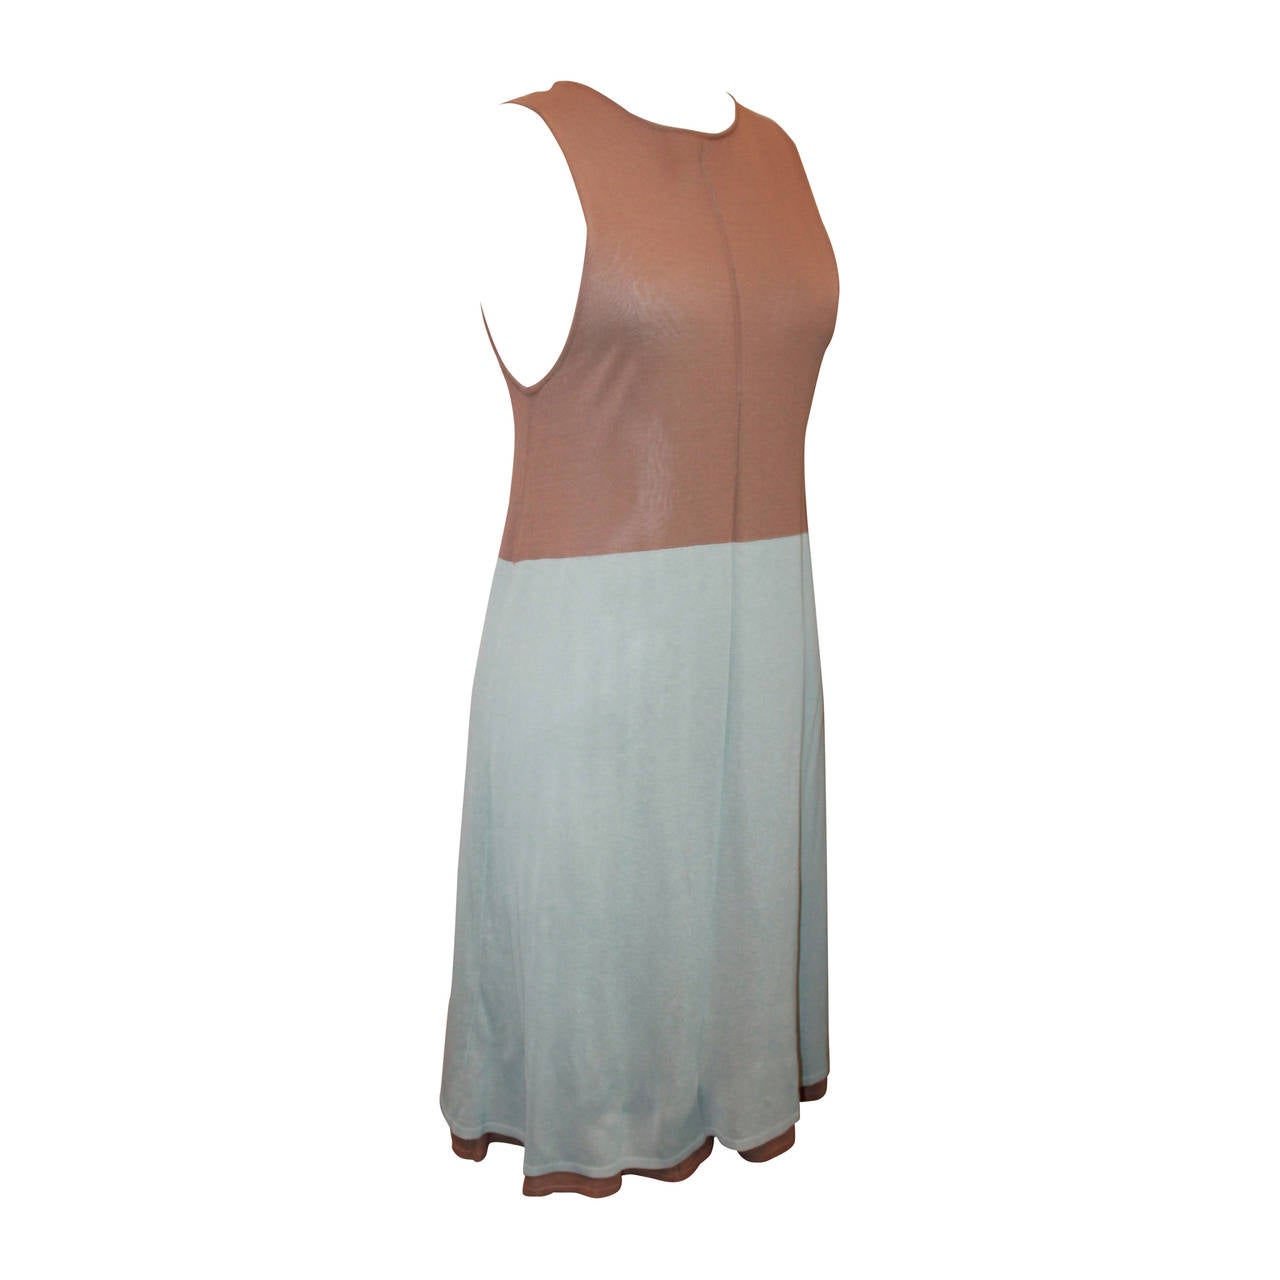 Balenciaga Tan and Pale Blue Sleeveless Dress - 42 For Sale